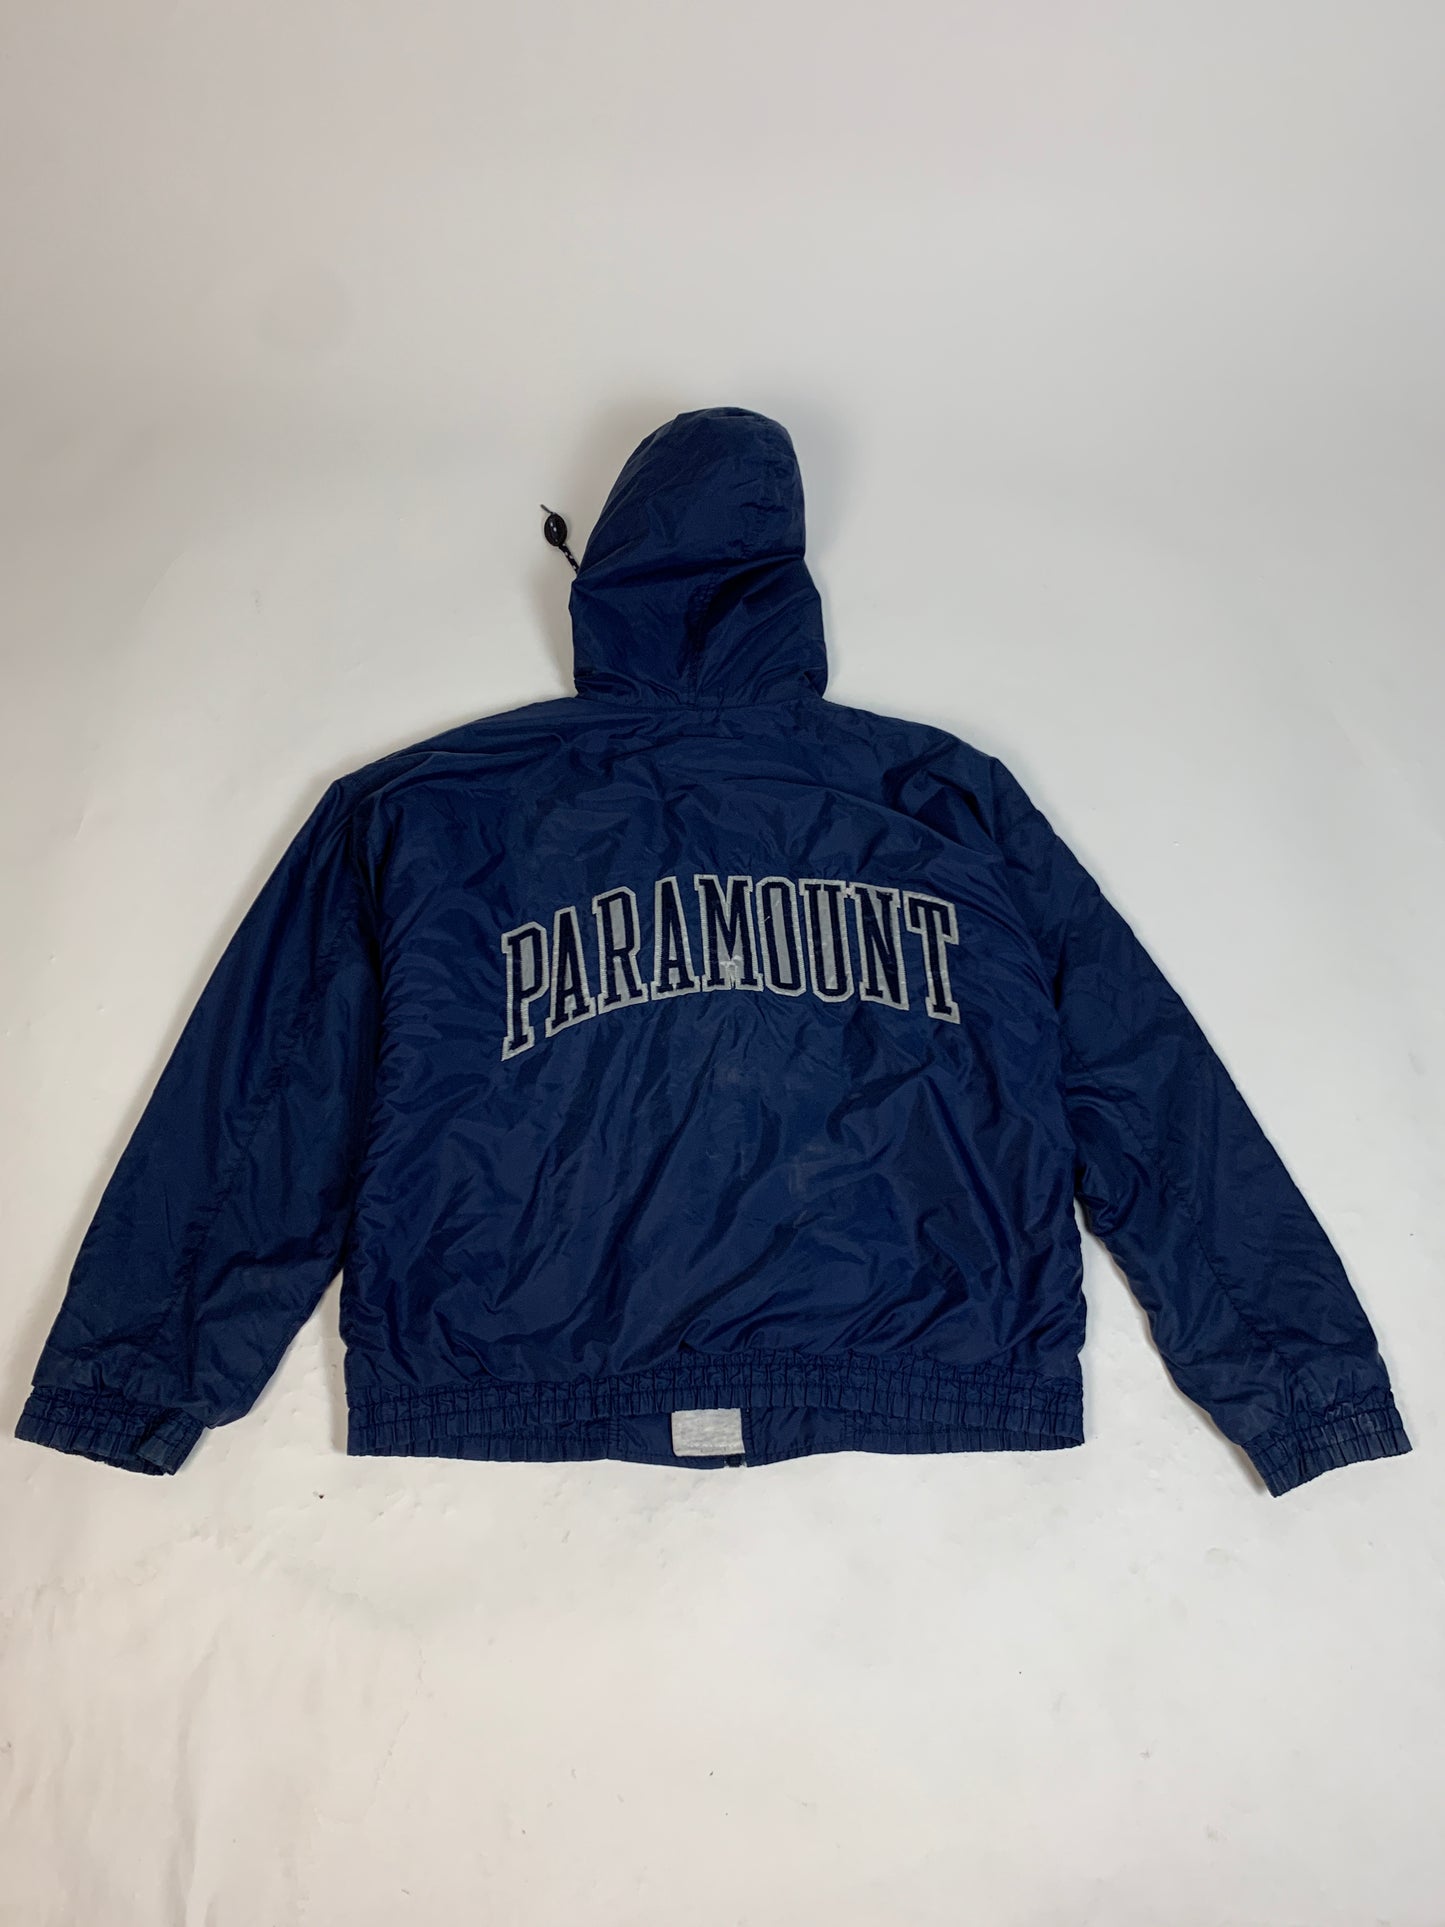 Paramount Windbreaker Jacket - M